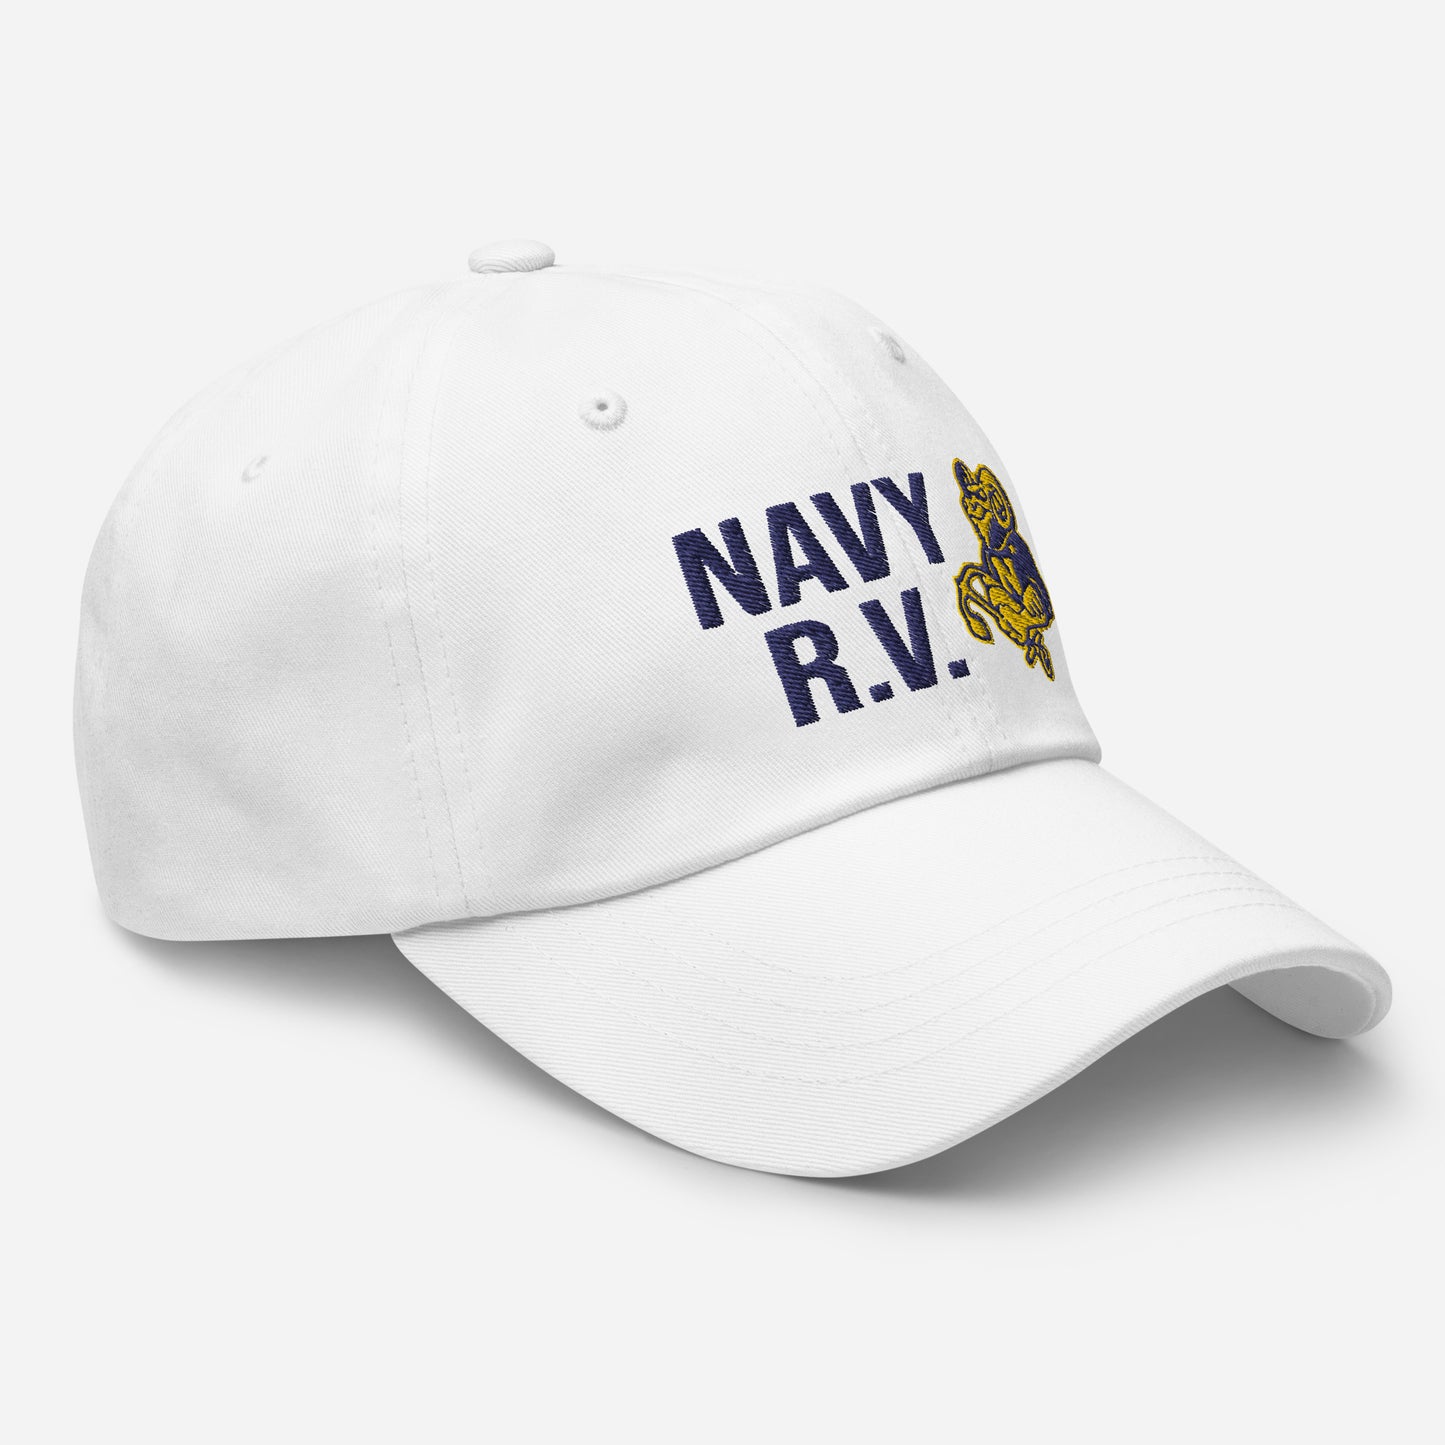 Navy RV Baseball Hat